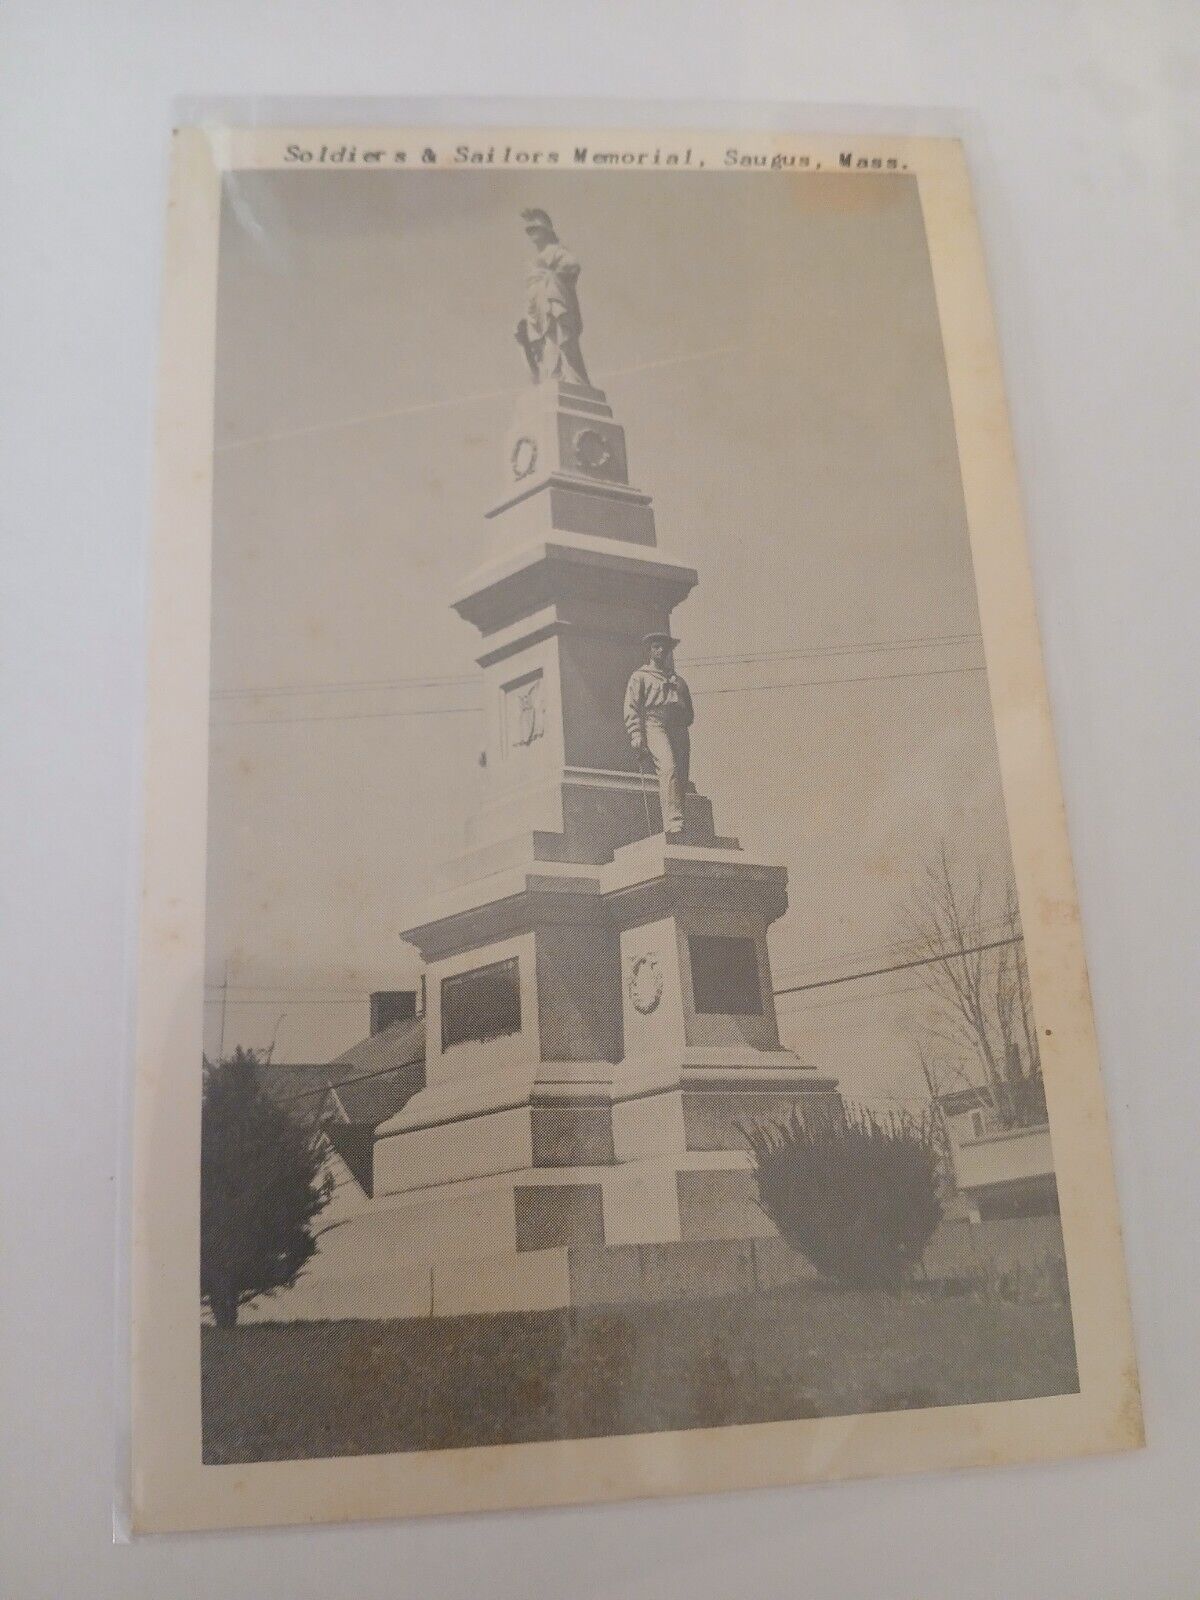 Soldier & Sailo War Memorial SAUGUS MA Massachusetts Vintage